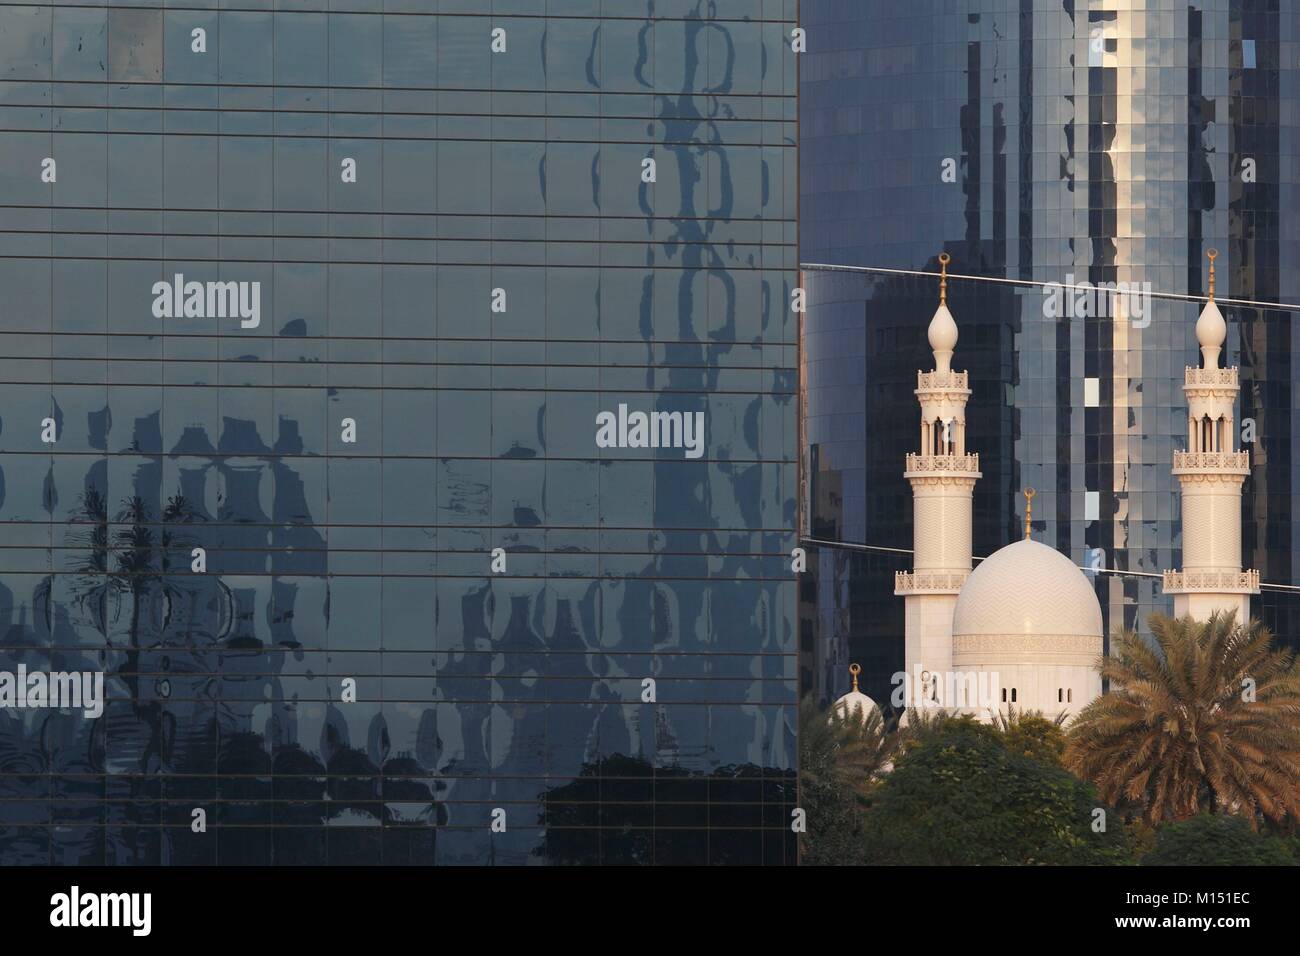 United Arab Emirates, Dubai, Deira, traditional architecture and modern tower Stock Photo